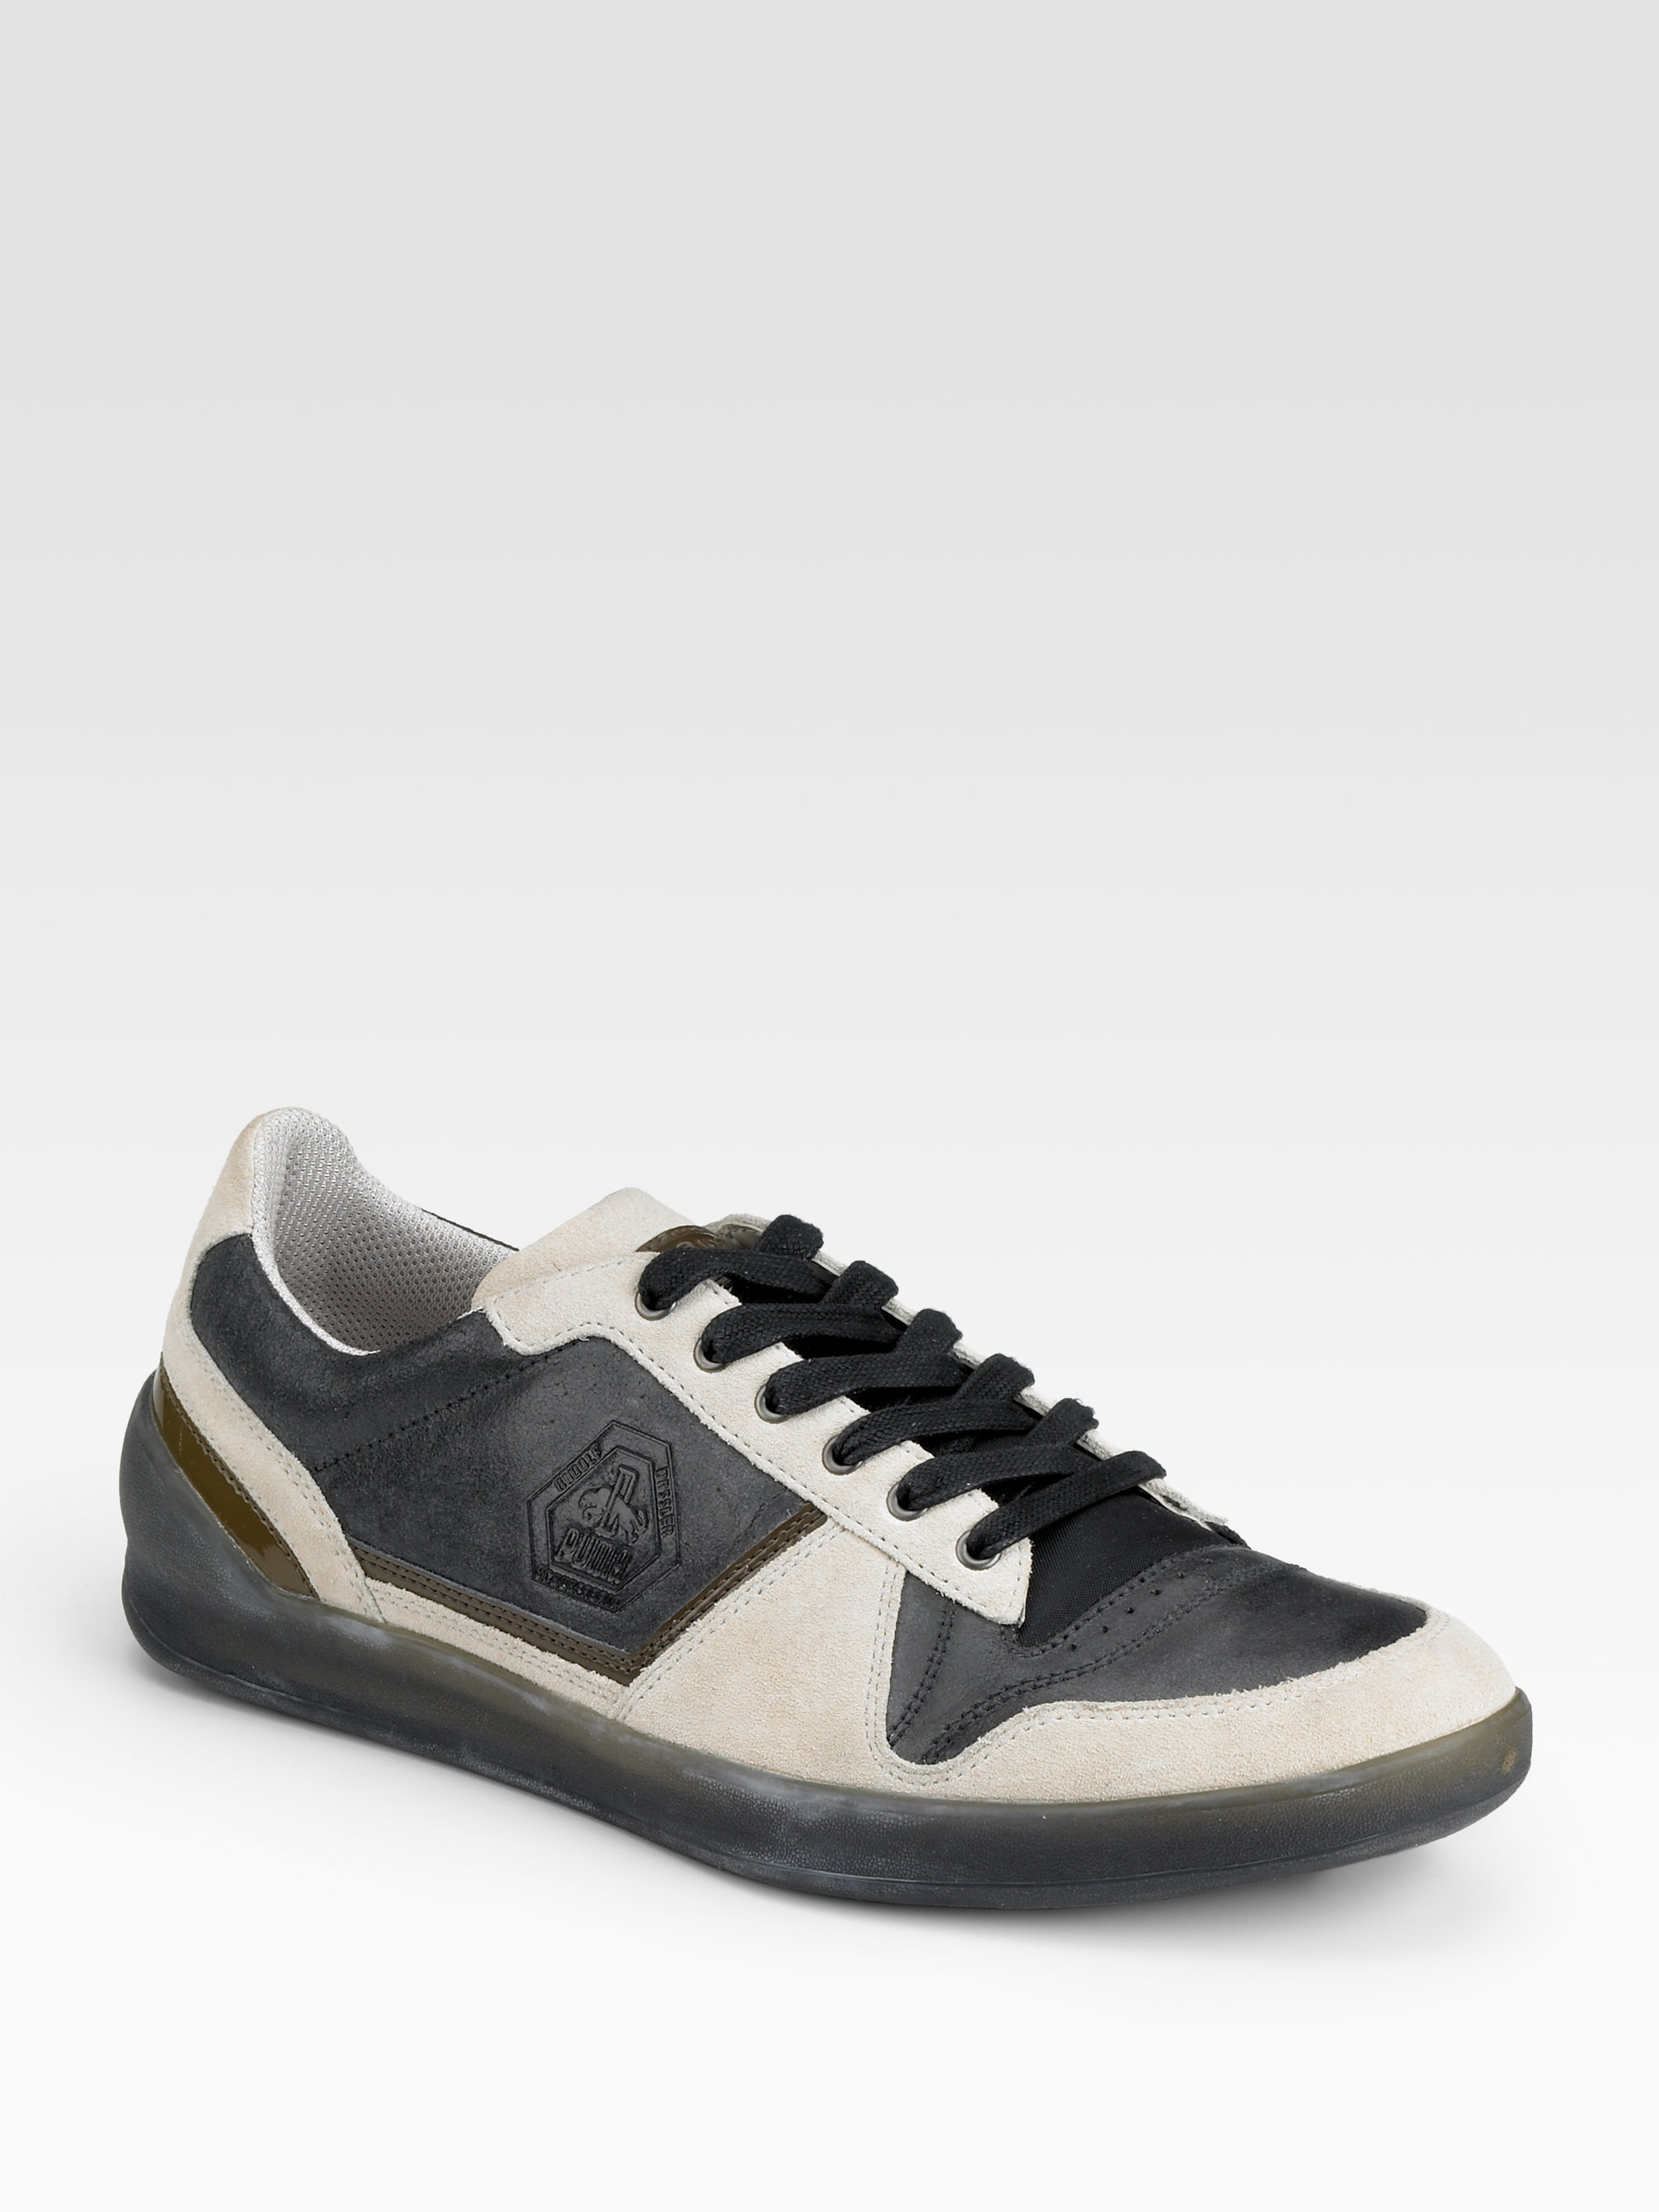 Puma X Rudolf Dassler Strassenmeister Lowtop Sneakers in Gray for Men ...